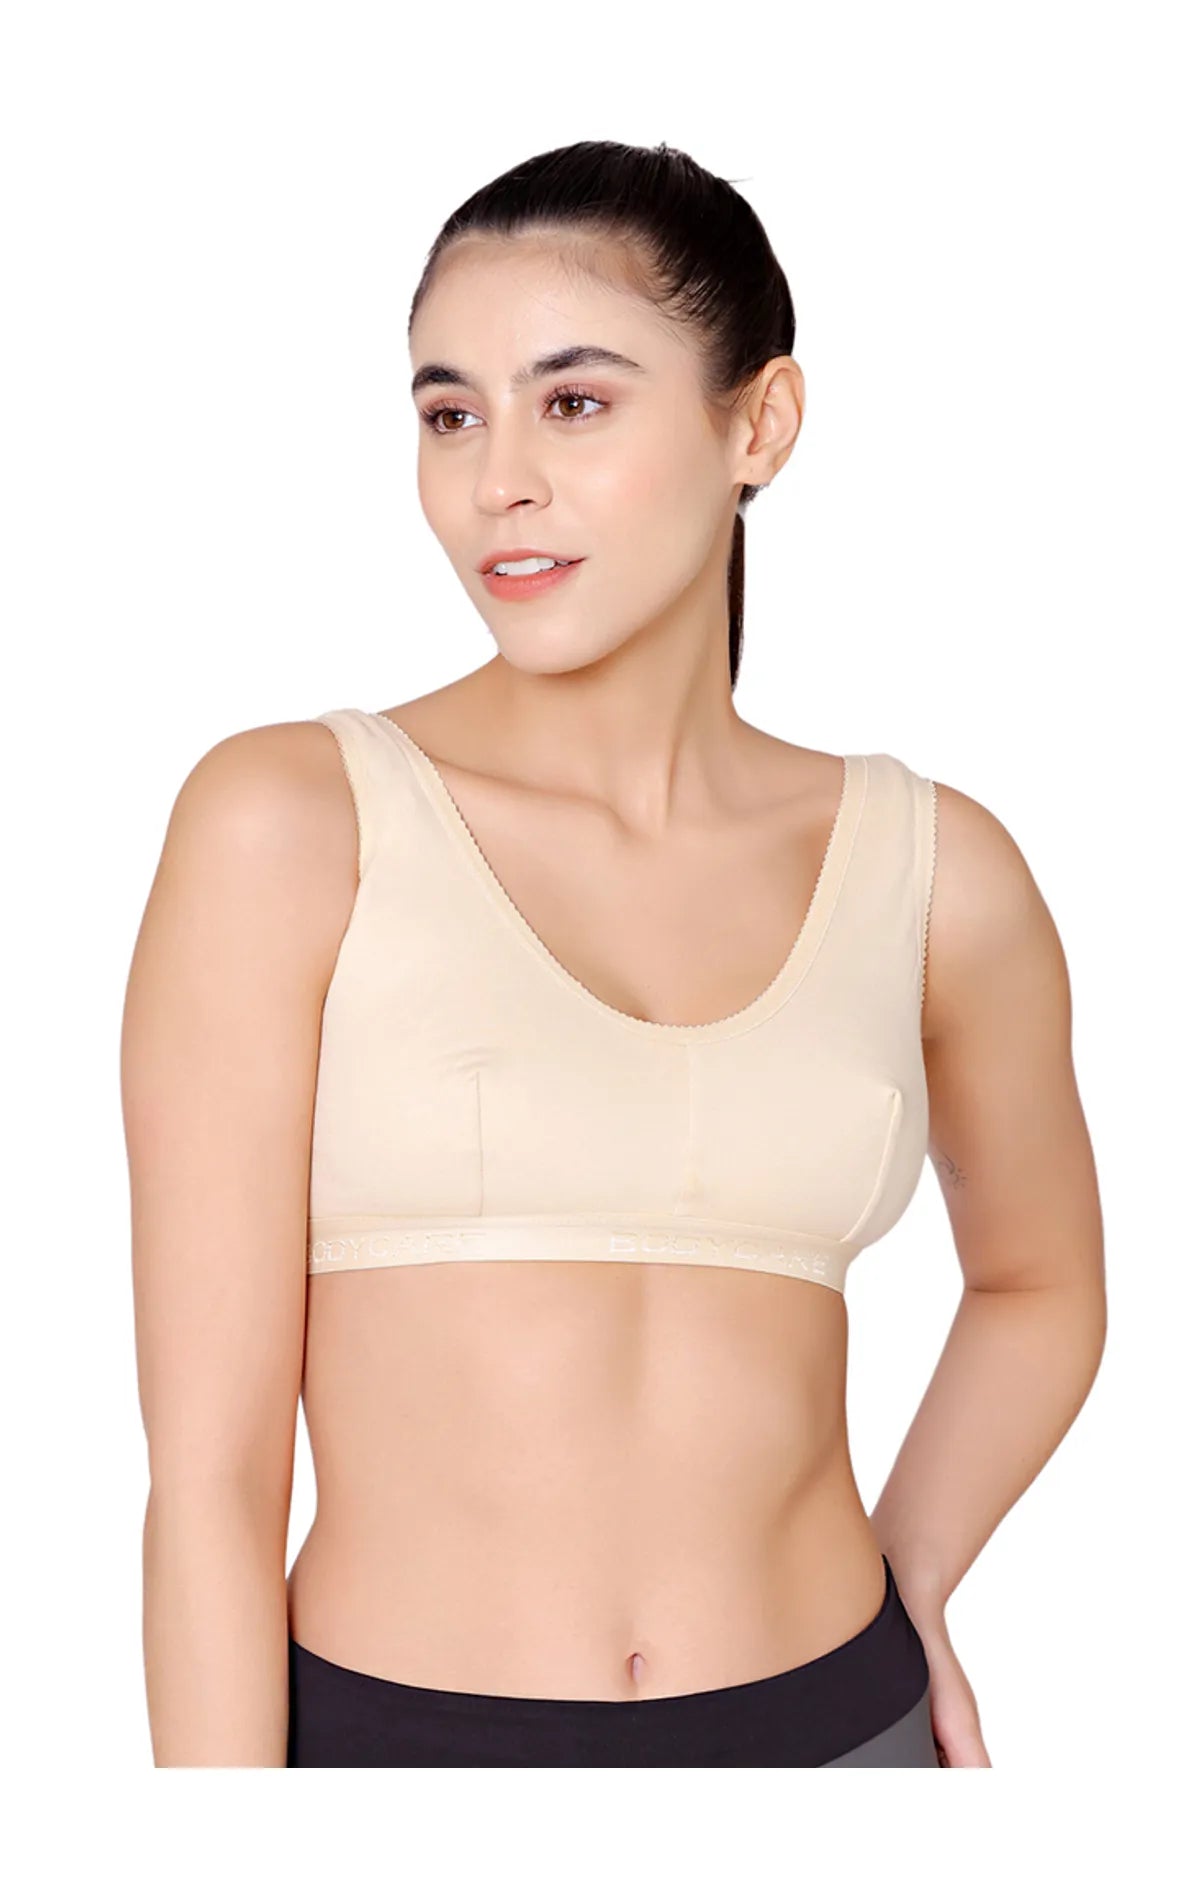 Buy Bodycare Women's Cotton Non Padded Wire Free Sports Bra White at